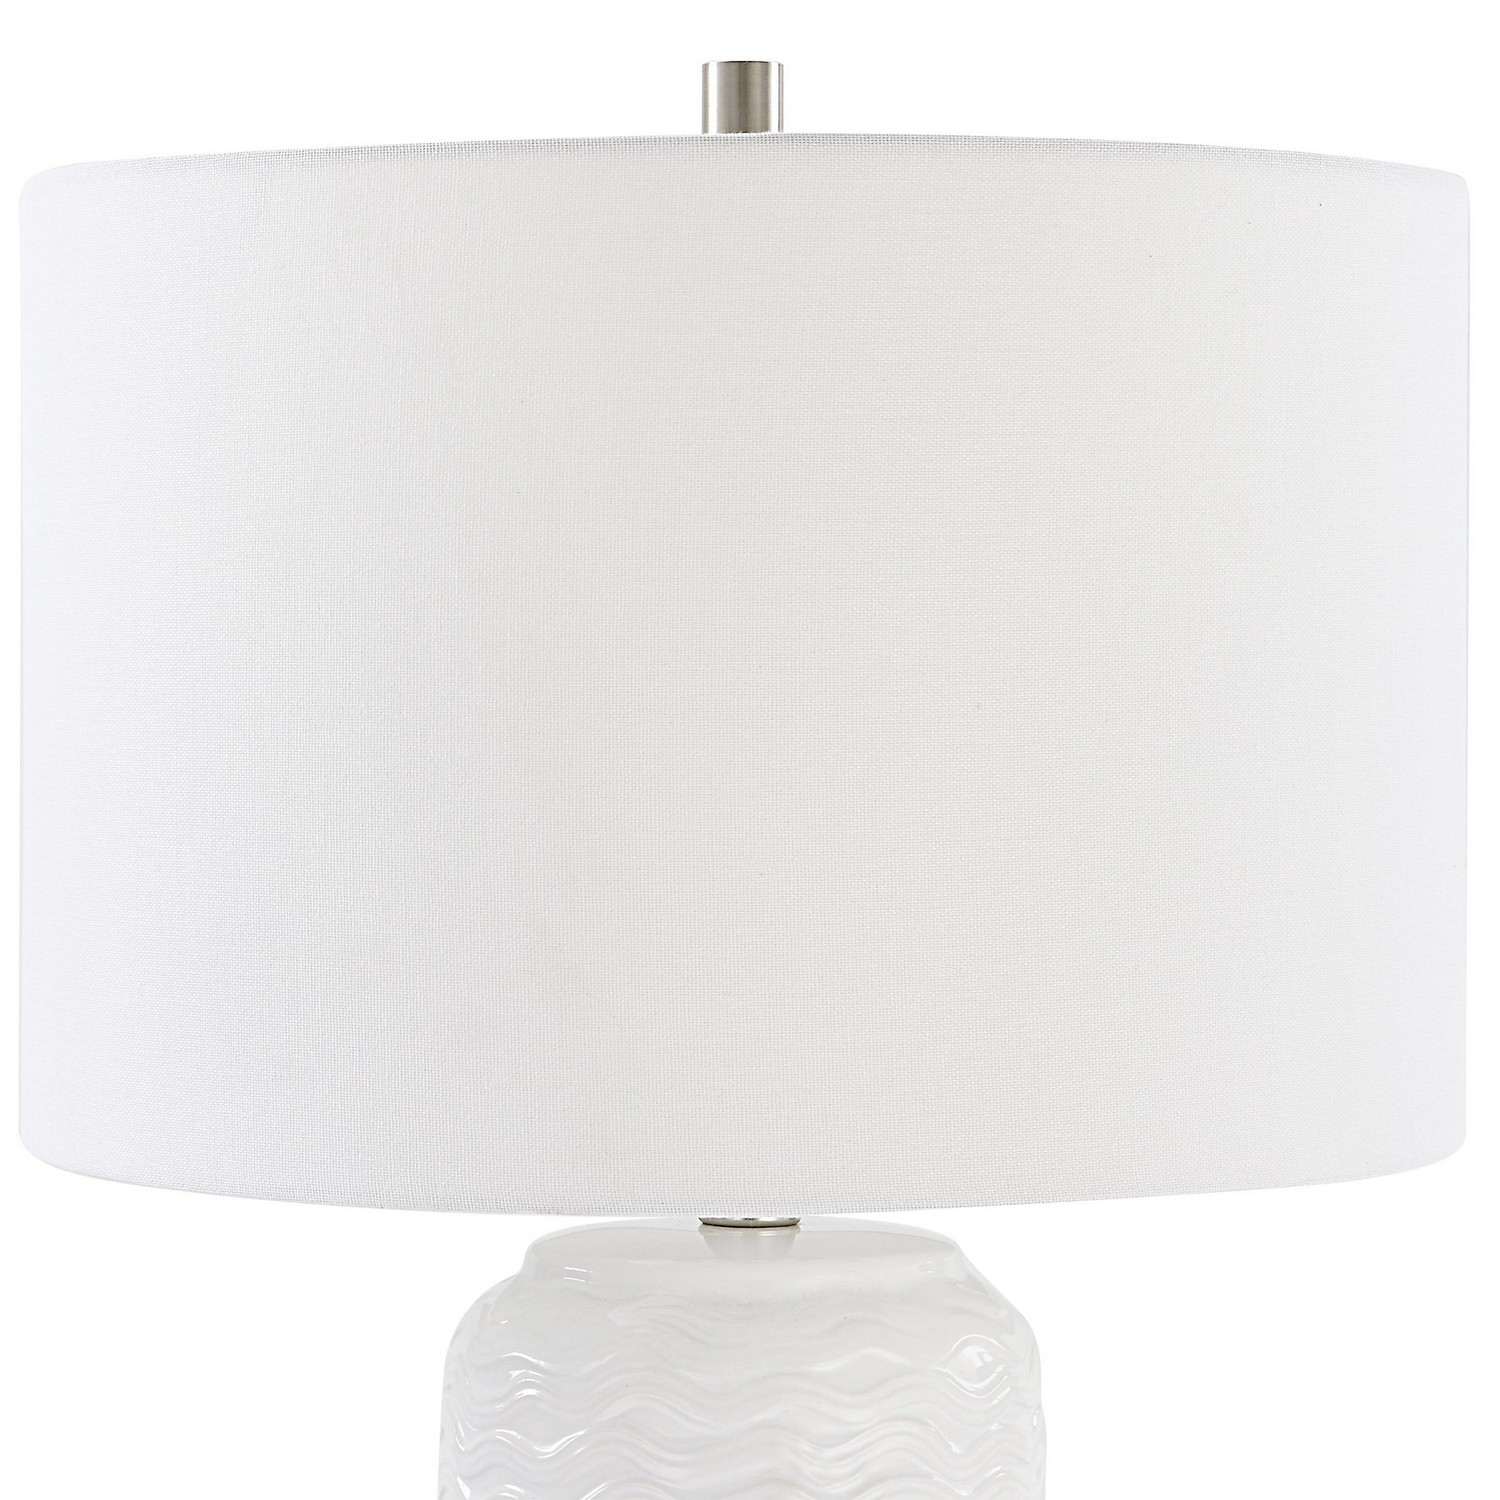 Uttermost W26093-1 Table Lamp - White Ceramic